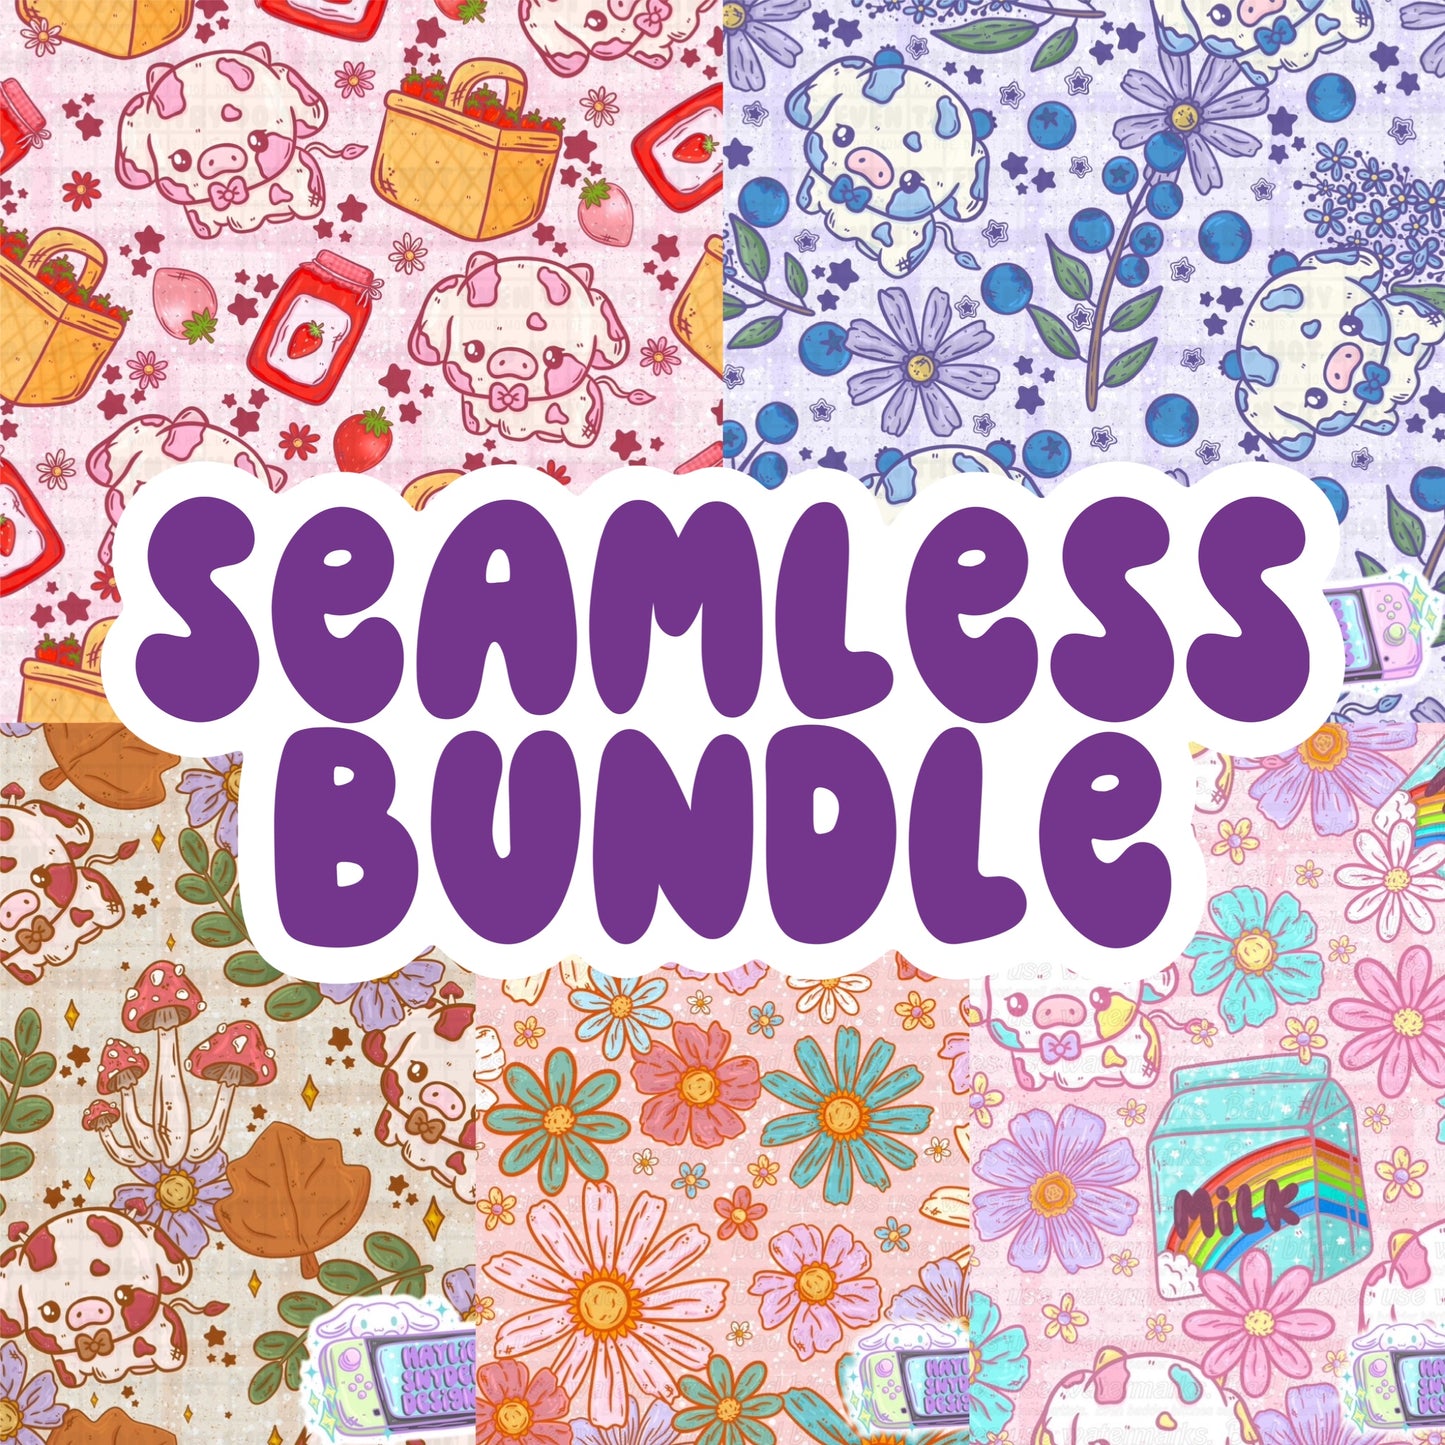 Seamless Bundle